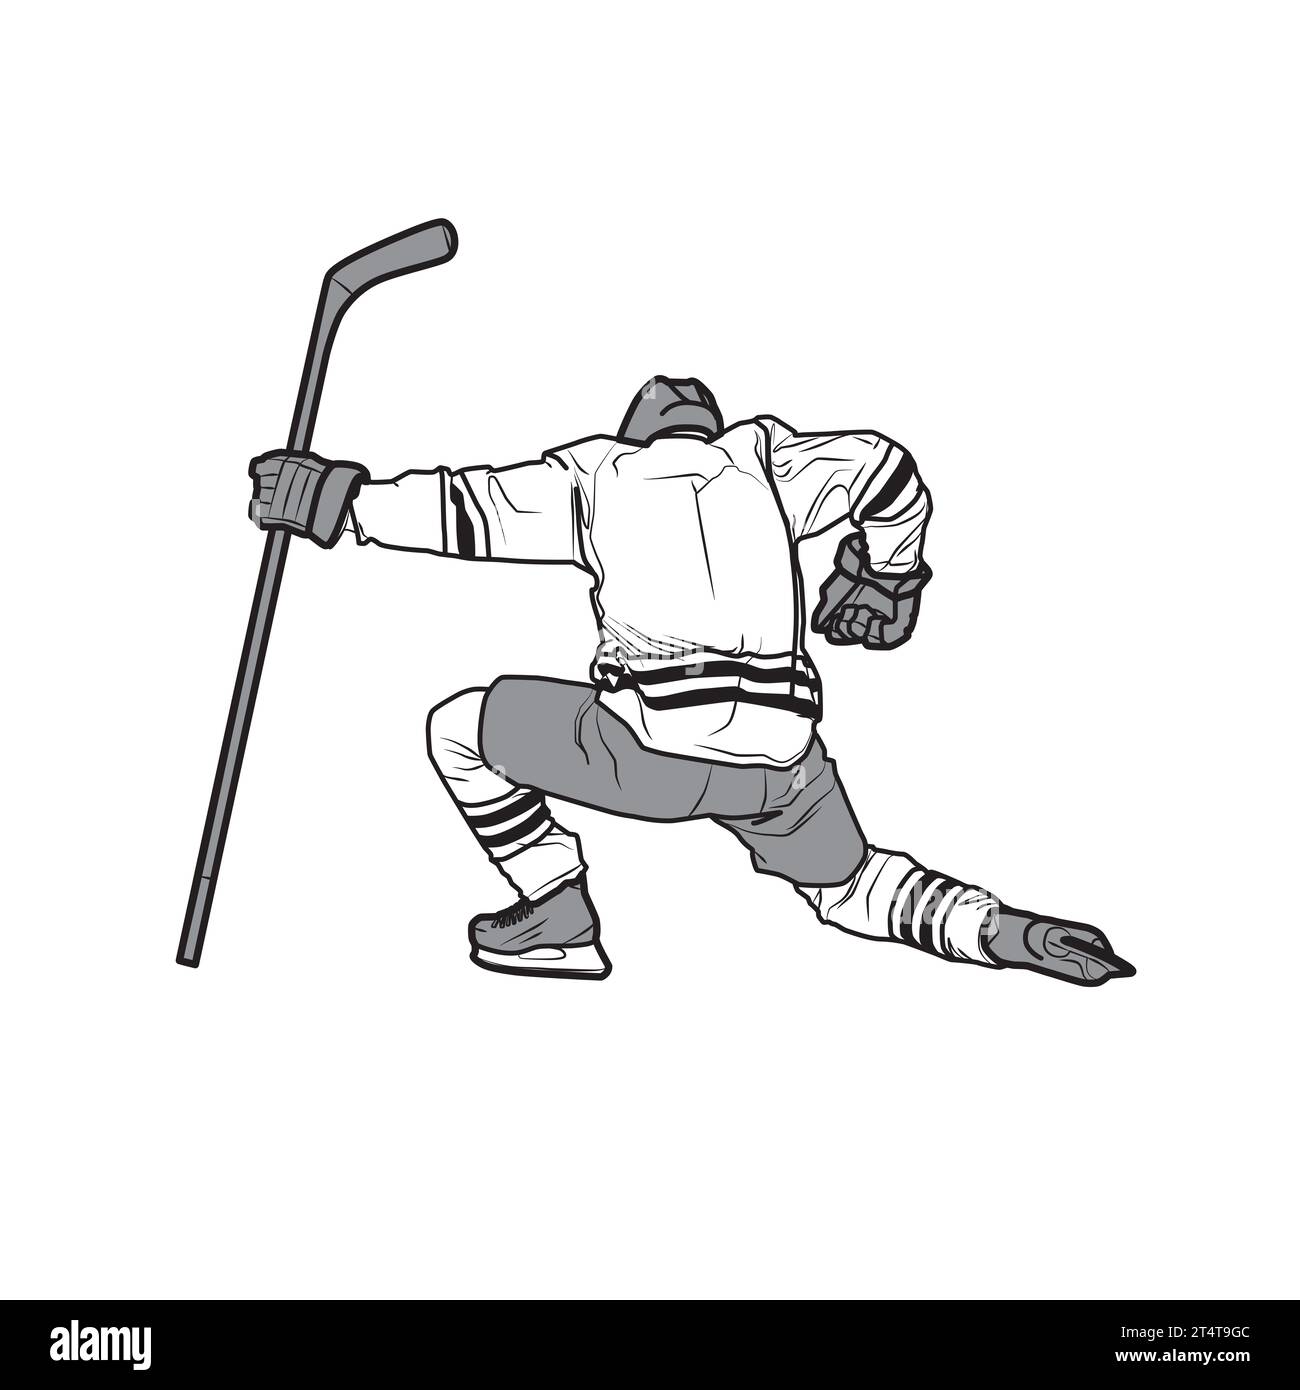 Hockey Player illustration detailed, drawing, ice hockey, player celebrating the score, goal, man 2 Stock Photo